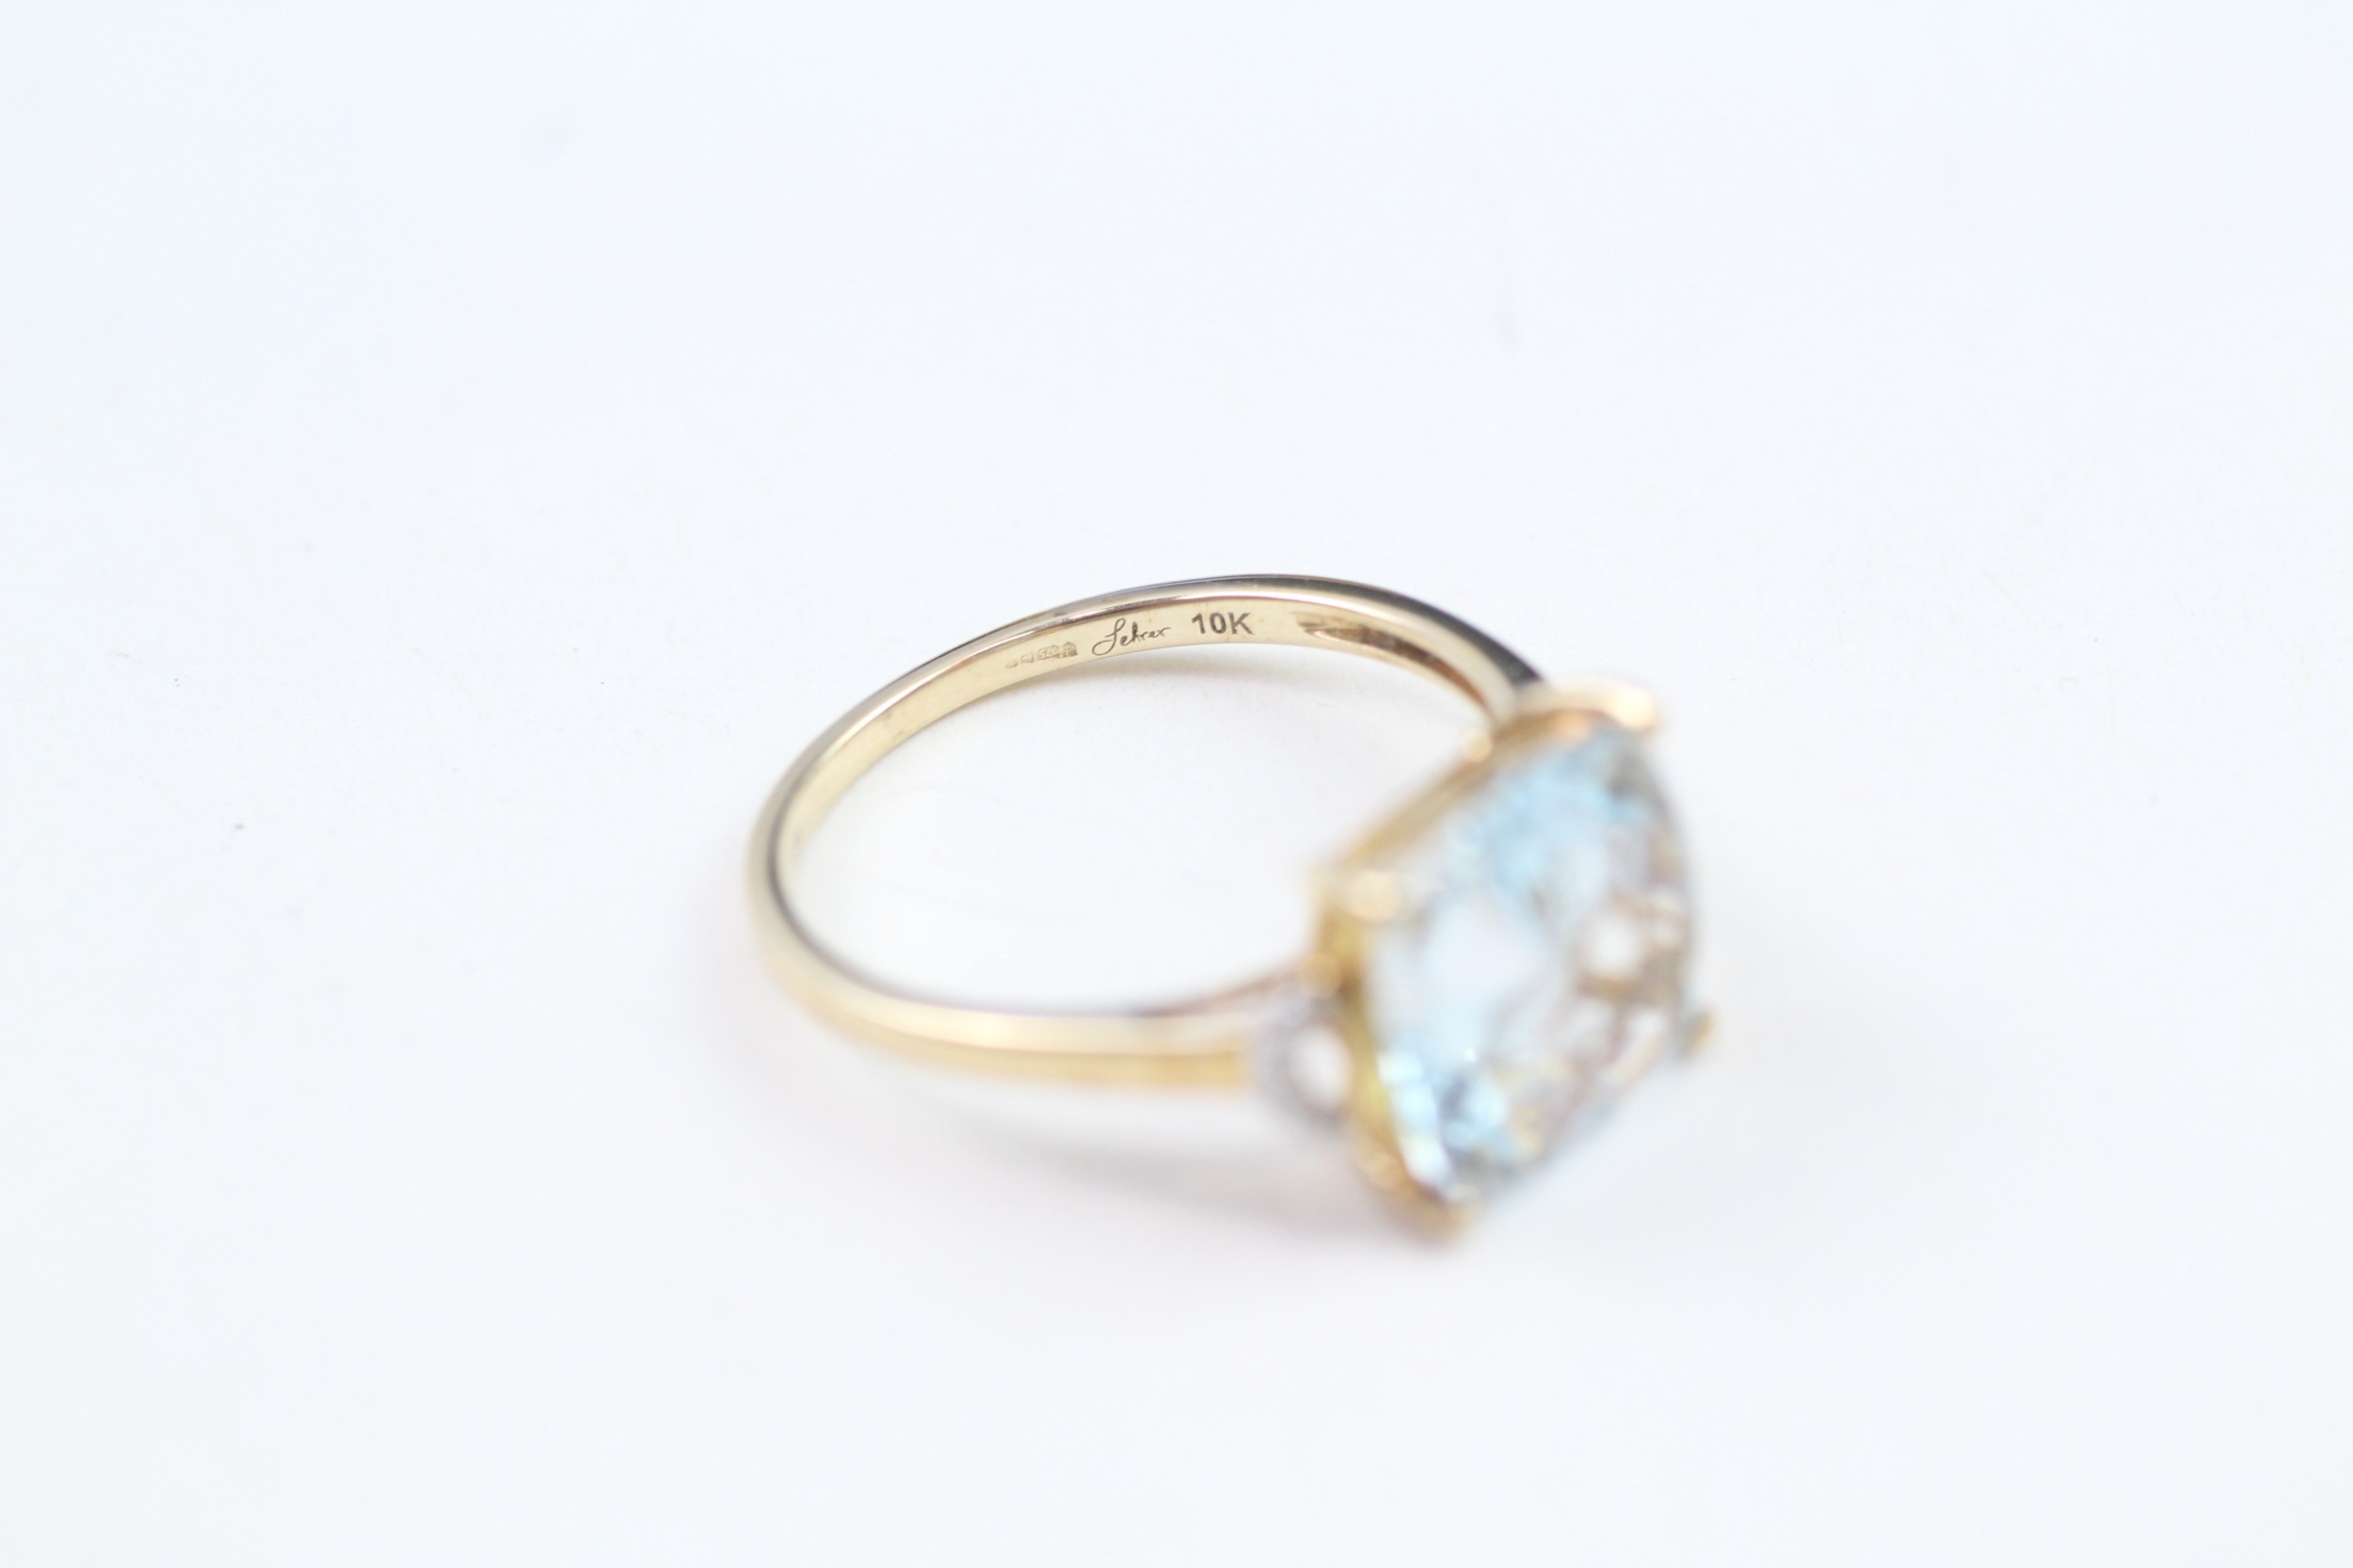 9ct gold unique cut blue topaz & diamond dress ring (2.3g) - Image 6 of 7